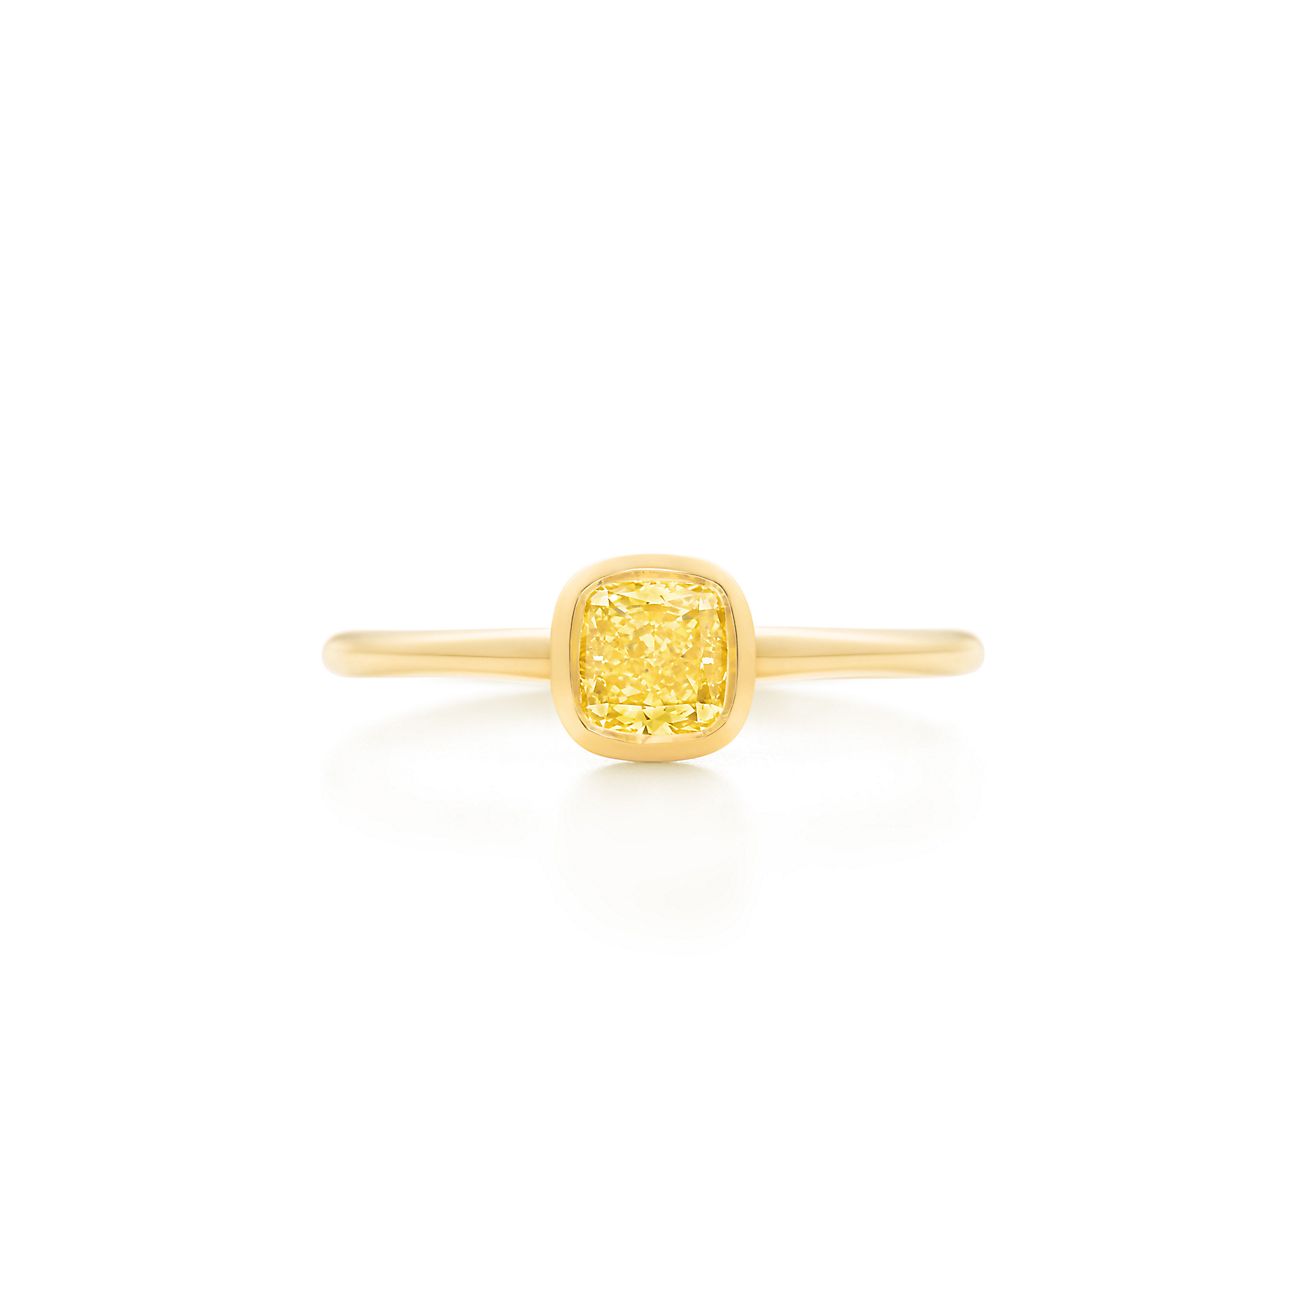 Tiffany Bezet™ yellow diamond ring in 